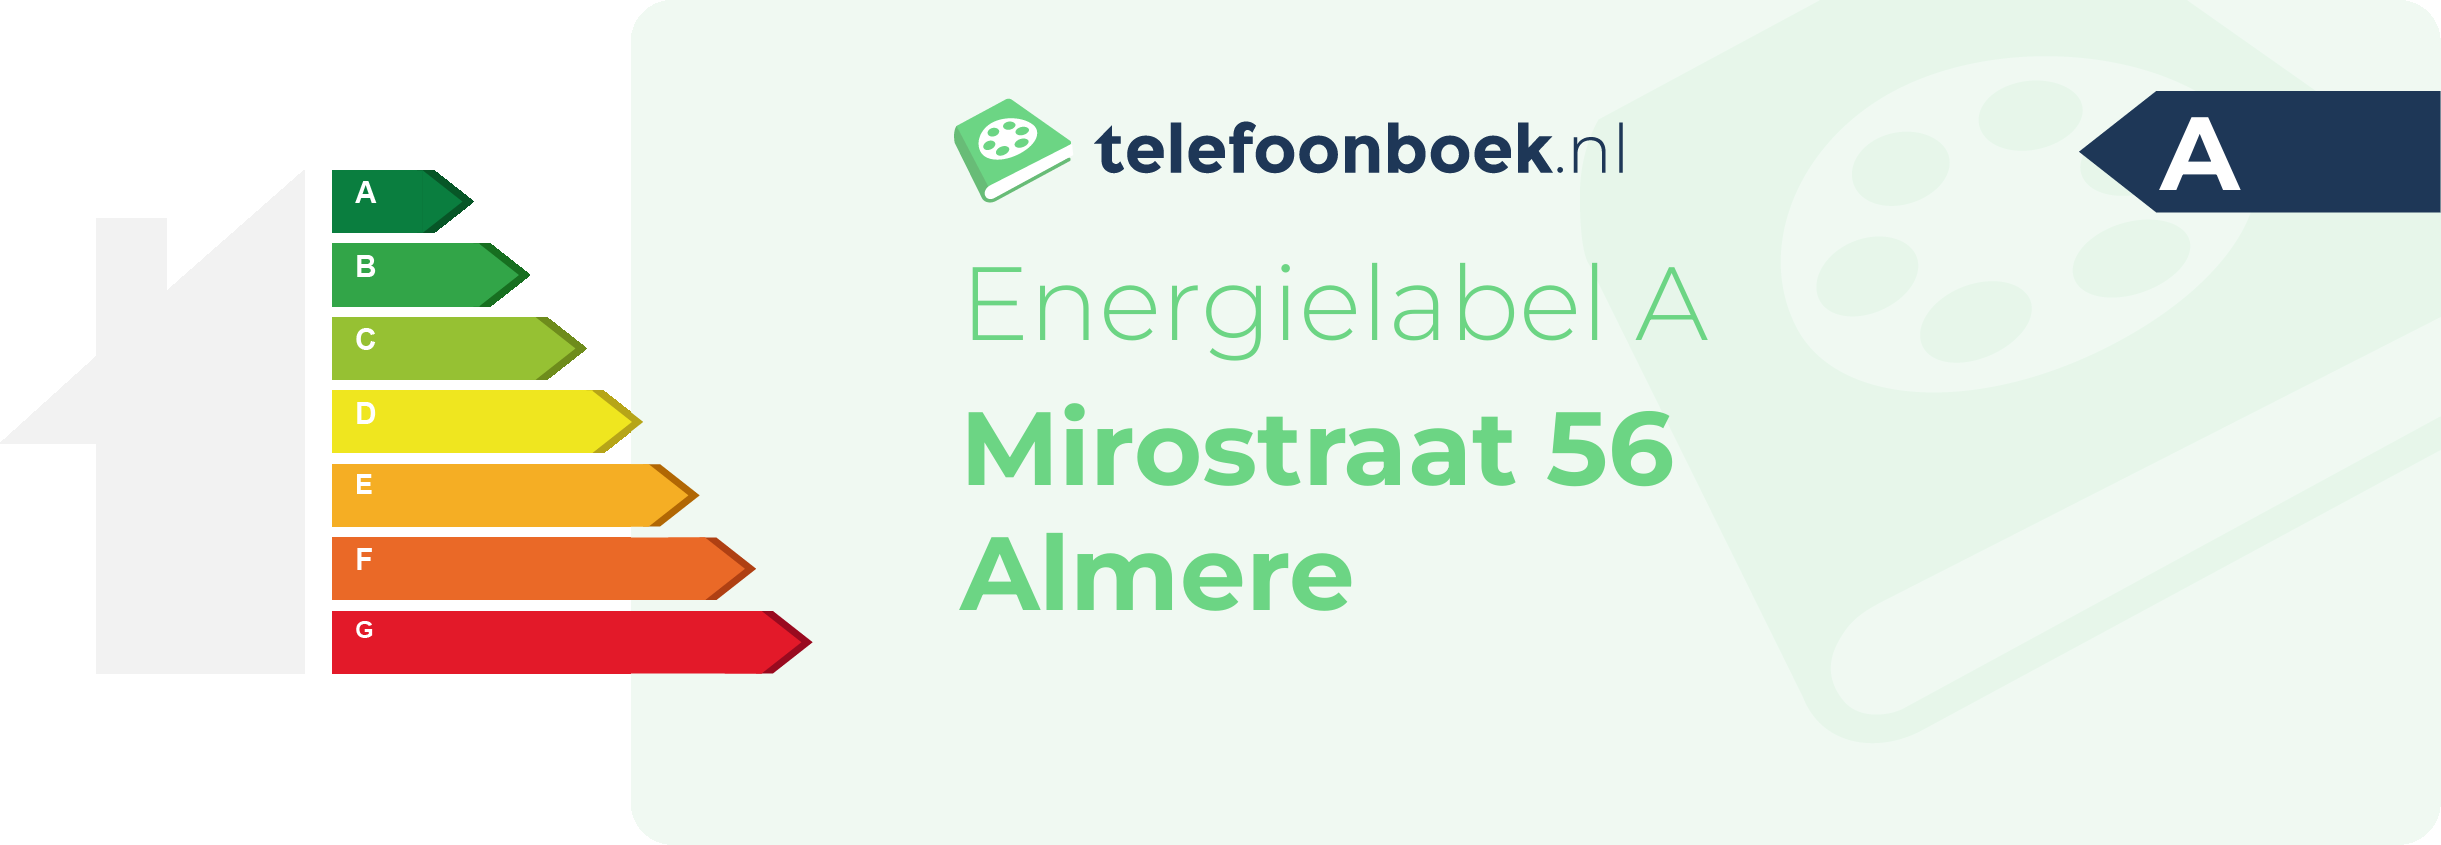 Energielabel Mirostraat 56 Almere